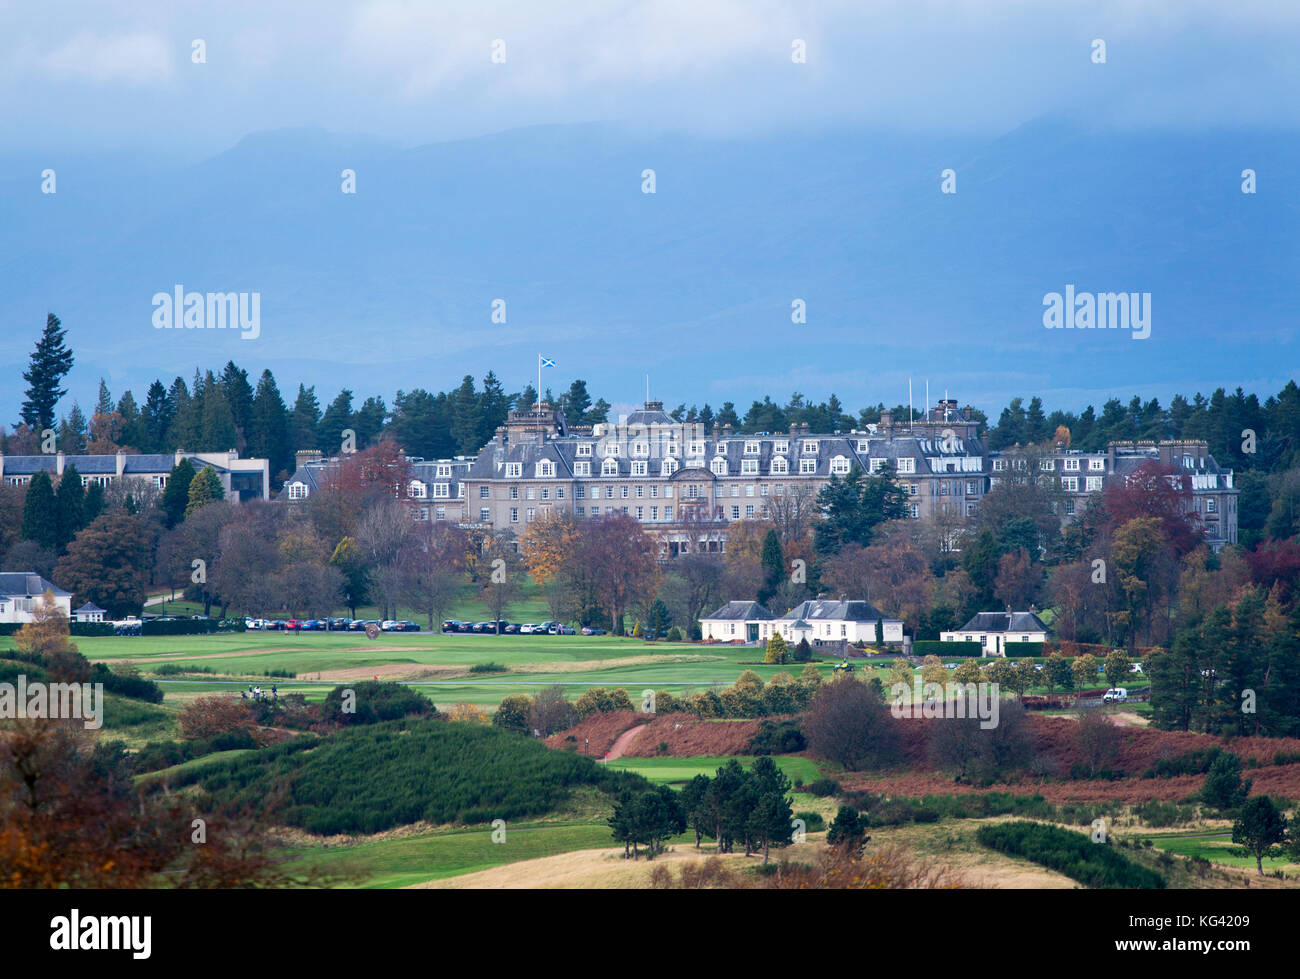 A view from Glen Devon of the Gleneagles luxury hotel, Auchterarder, Perthshire, Scotland. Stock Photo